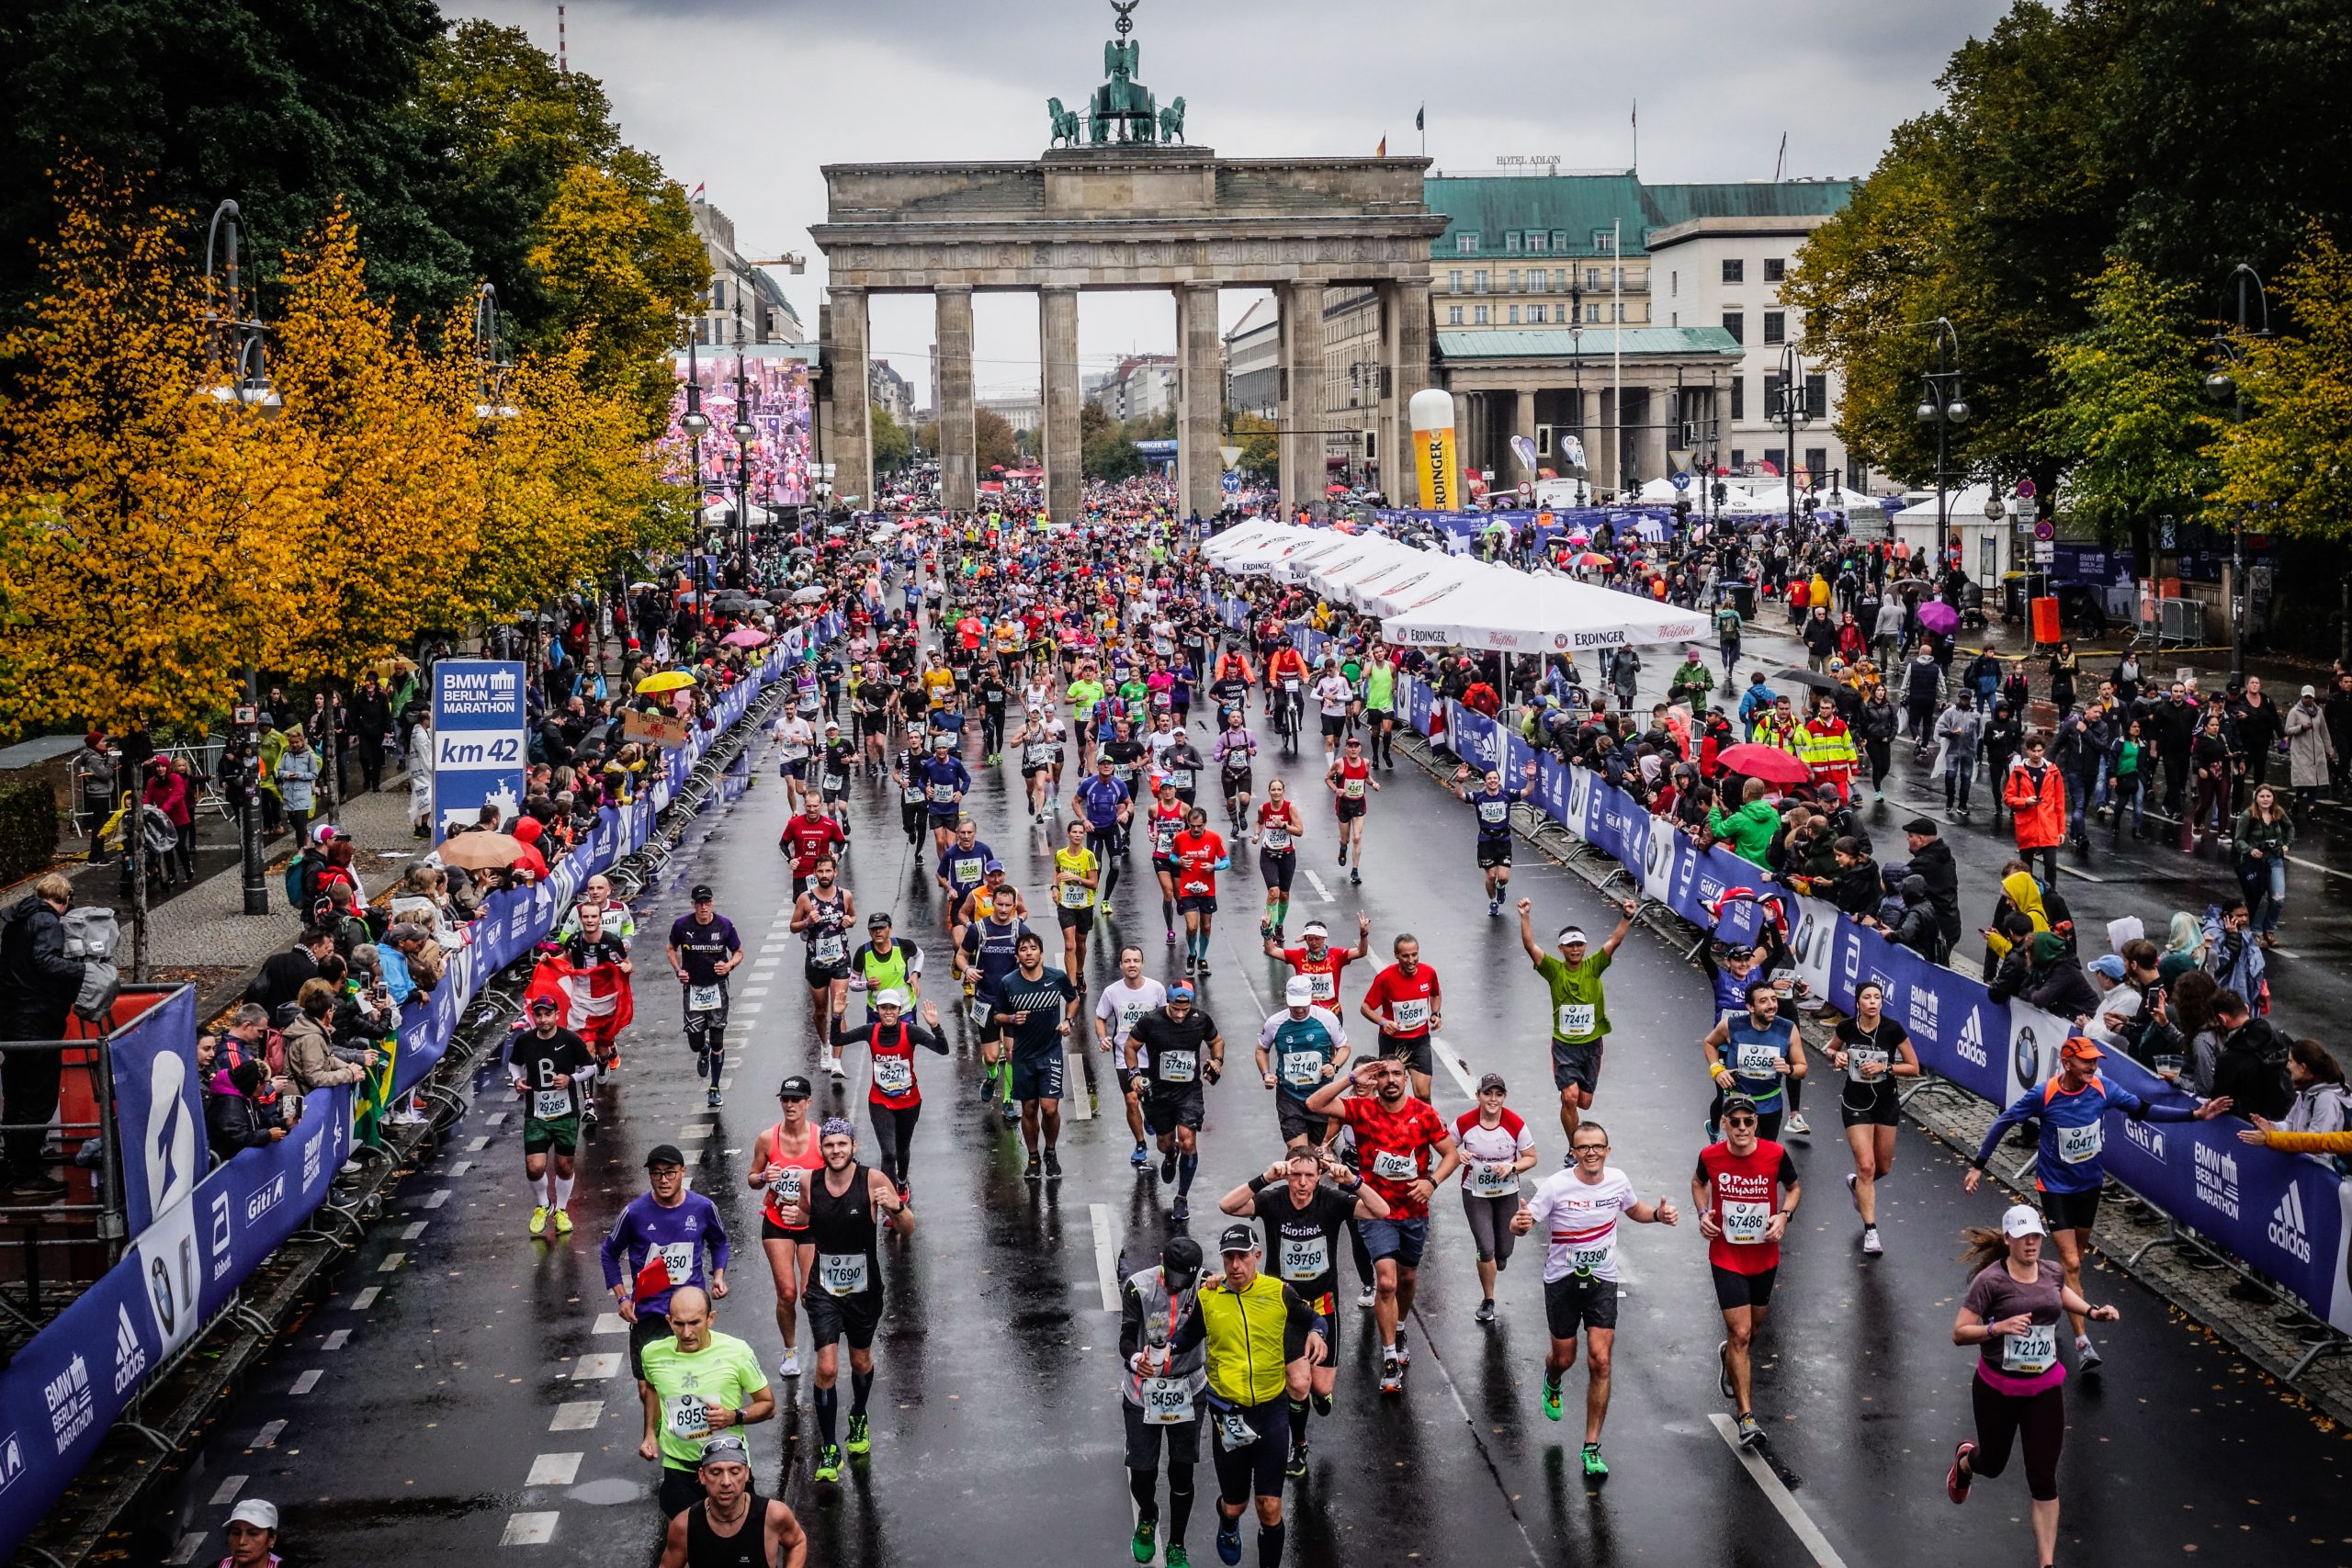 Berlin-marathon 2022 - Registration - MitziValiant